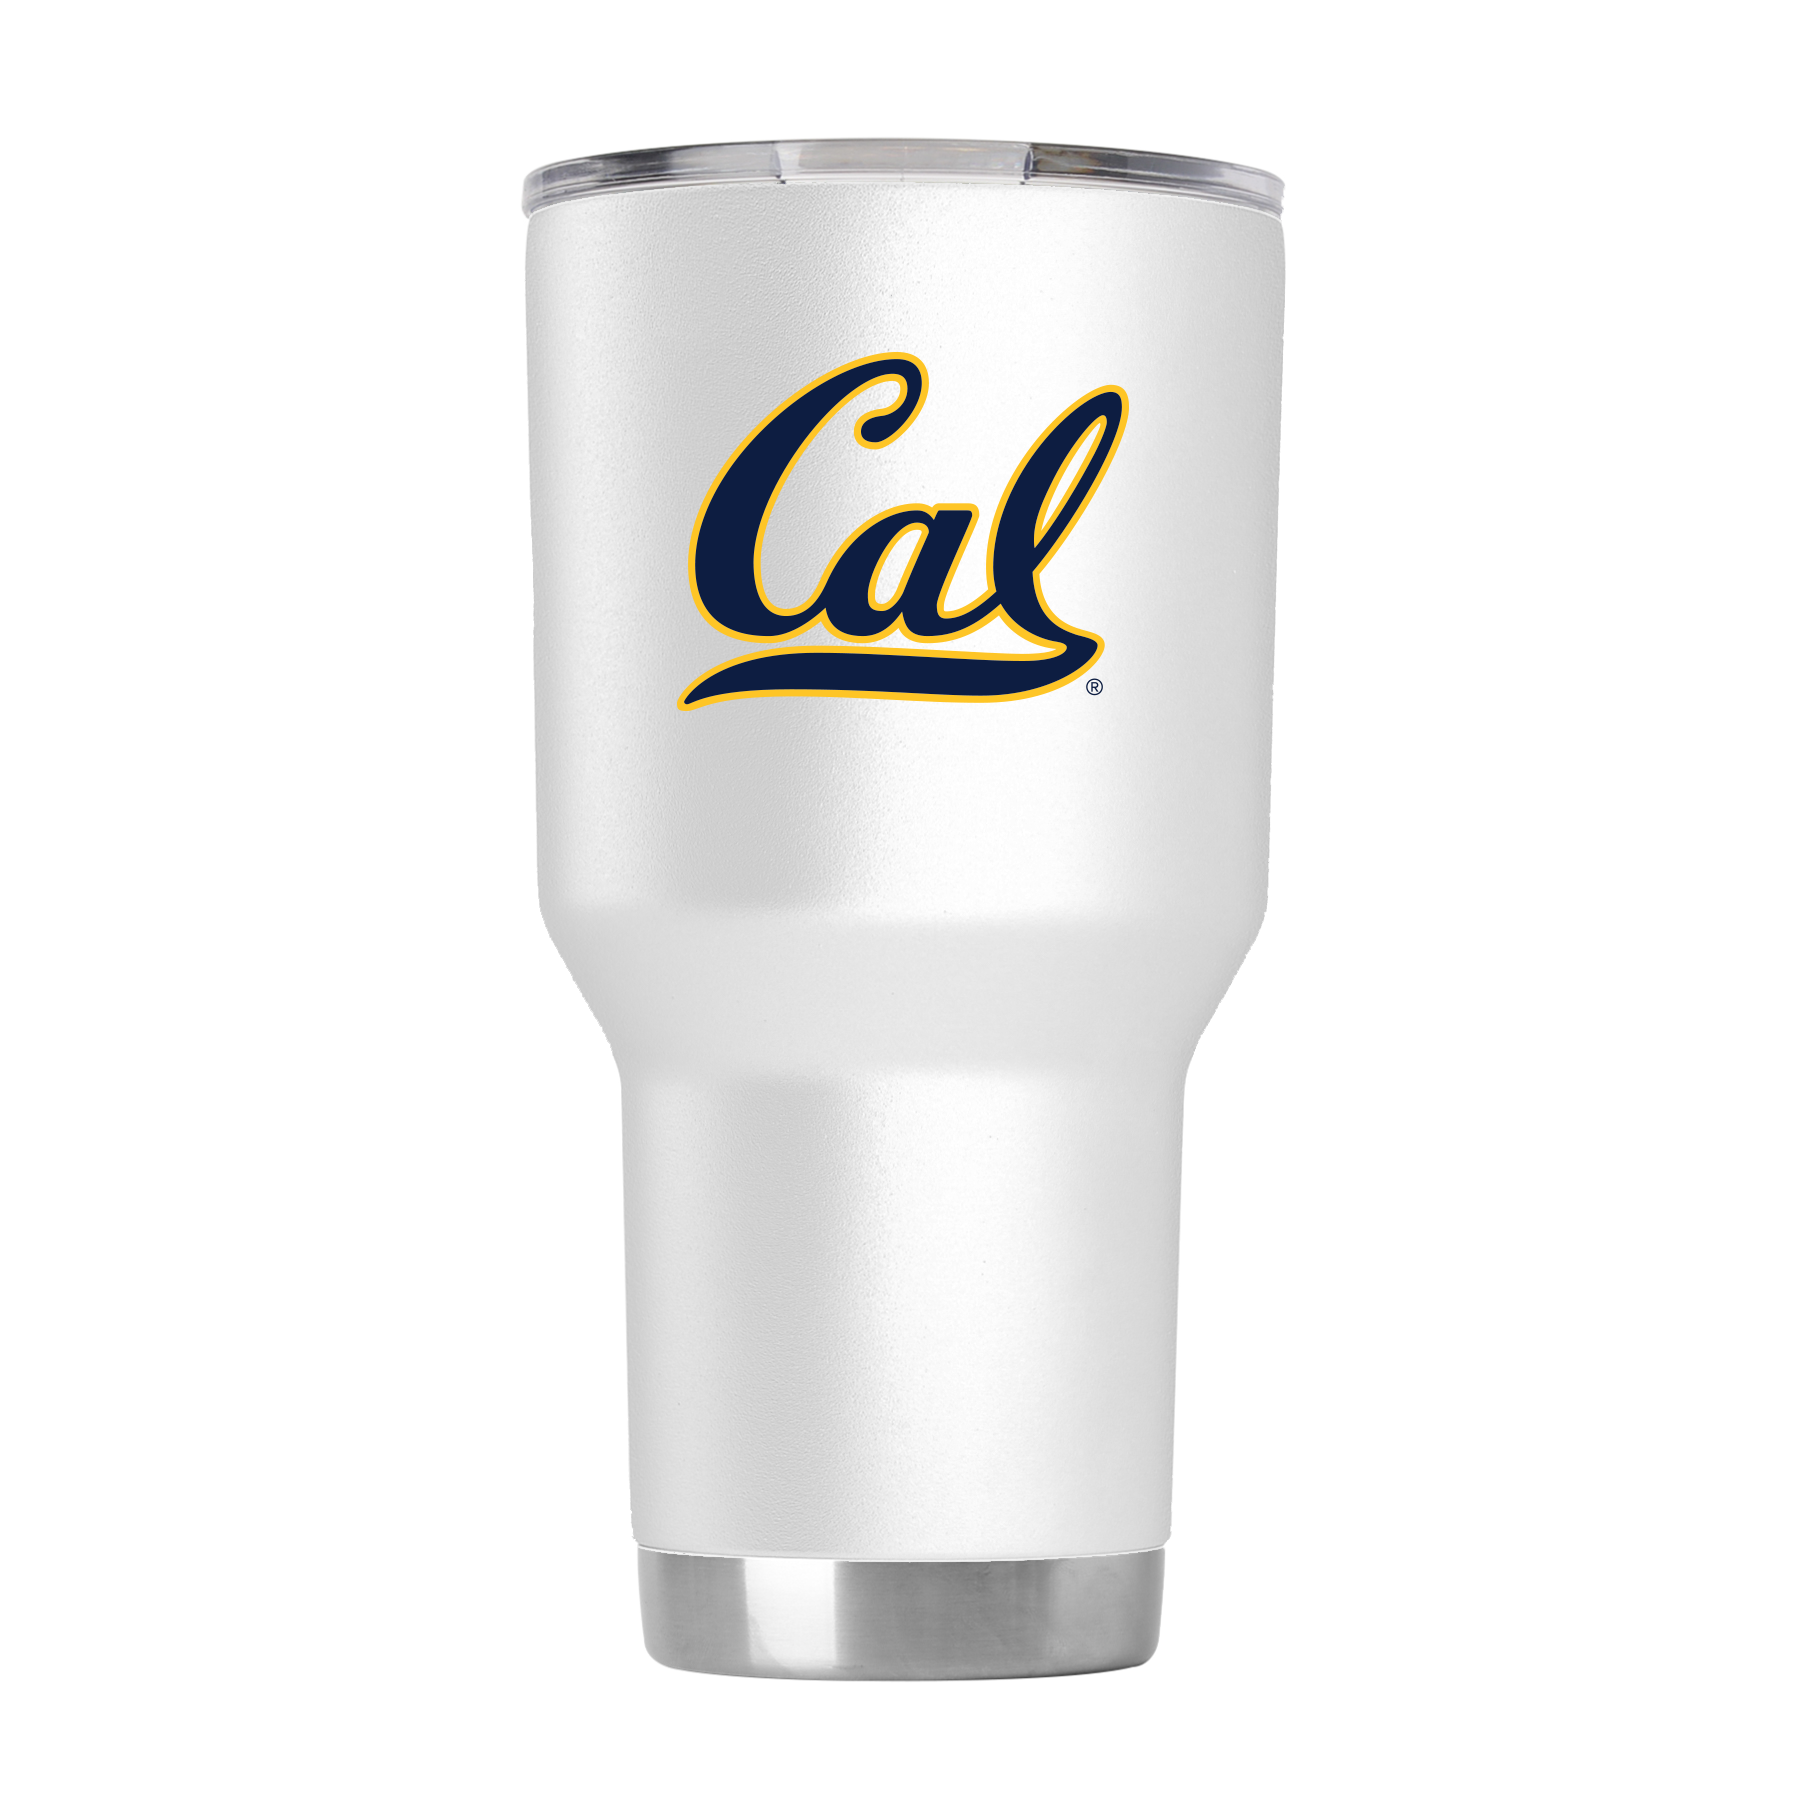 Copy of U.C. Berkeley Cal Stainless Steel Tumbler 30 oz.-White-Shop College Wear